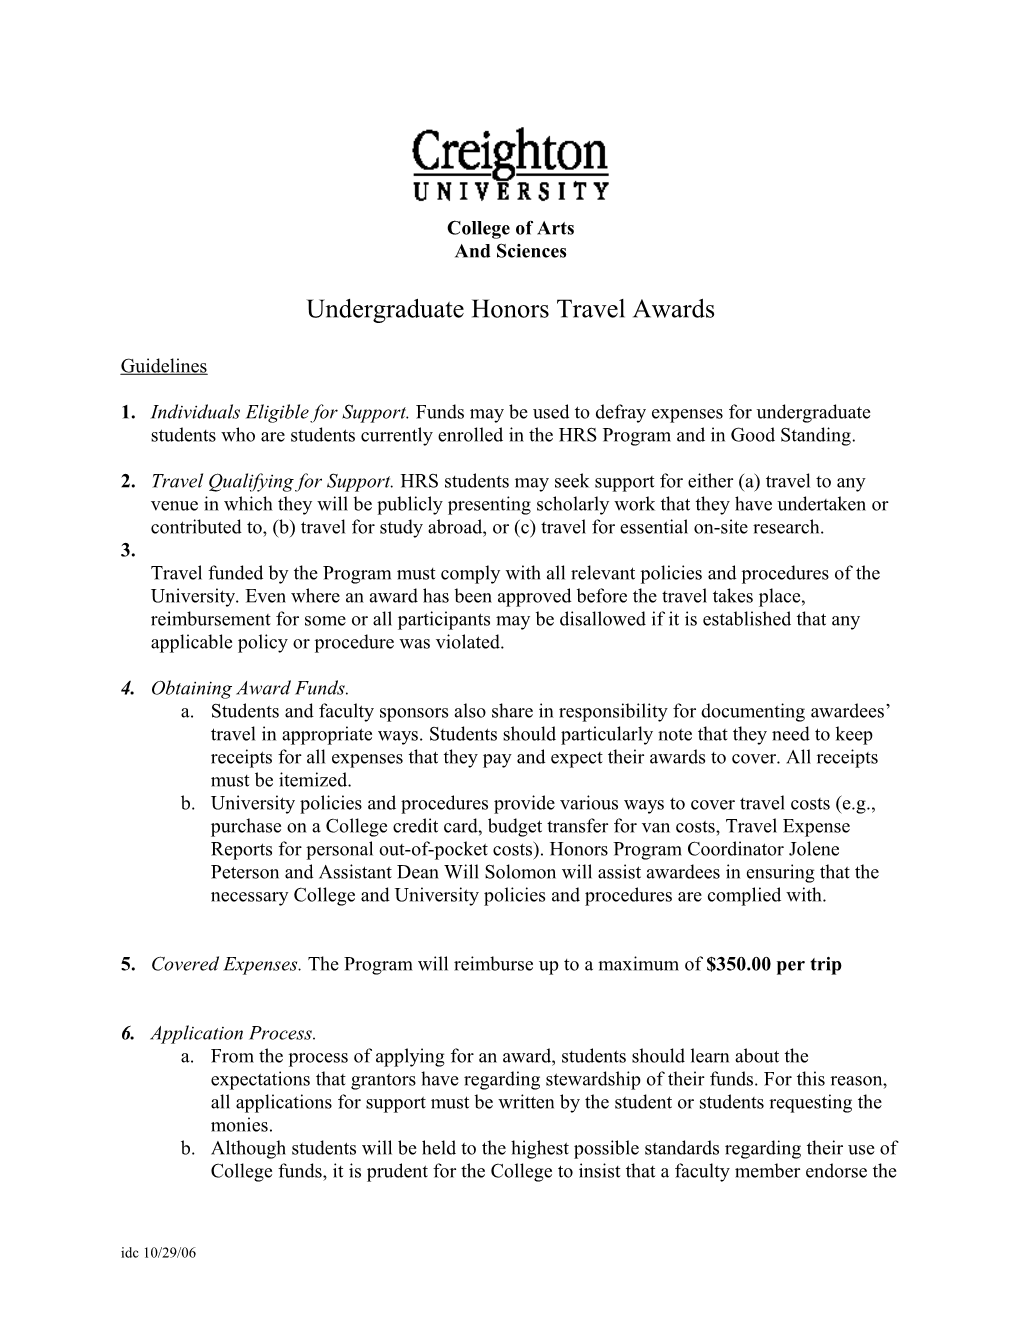 Undergraduate Travel Awards